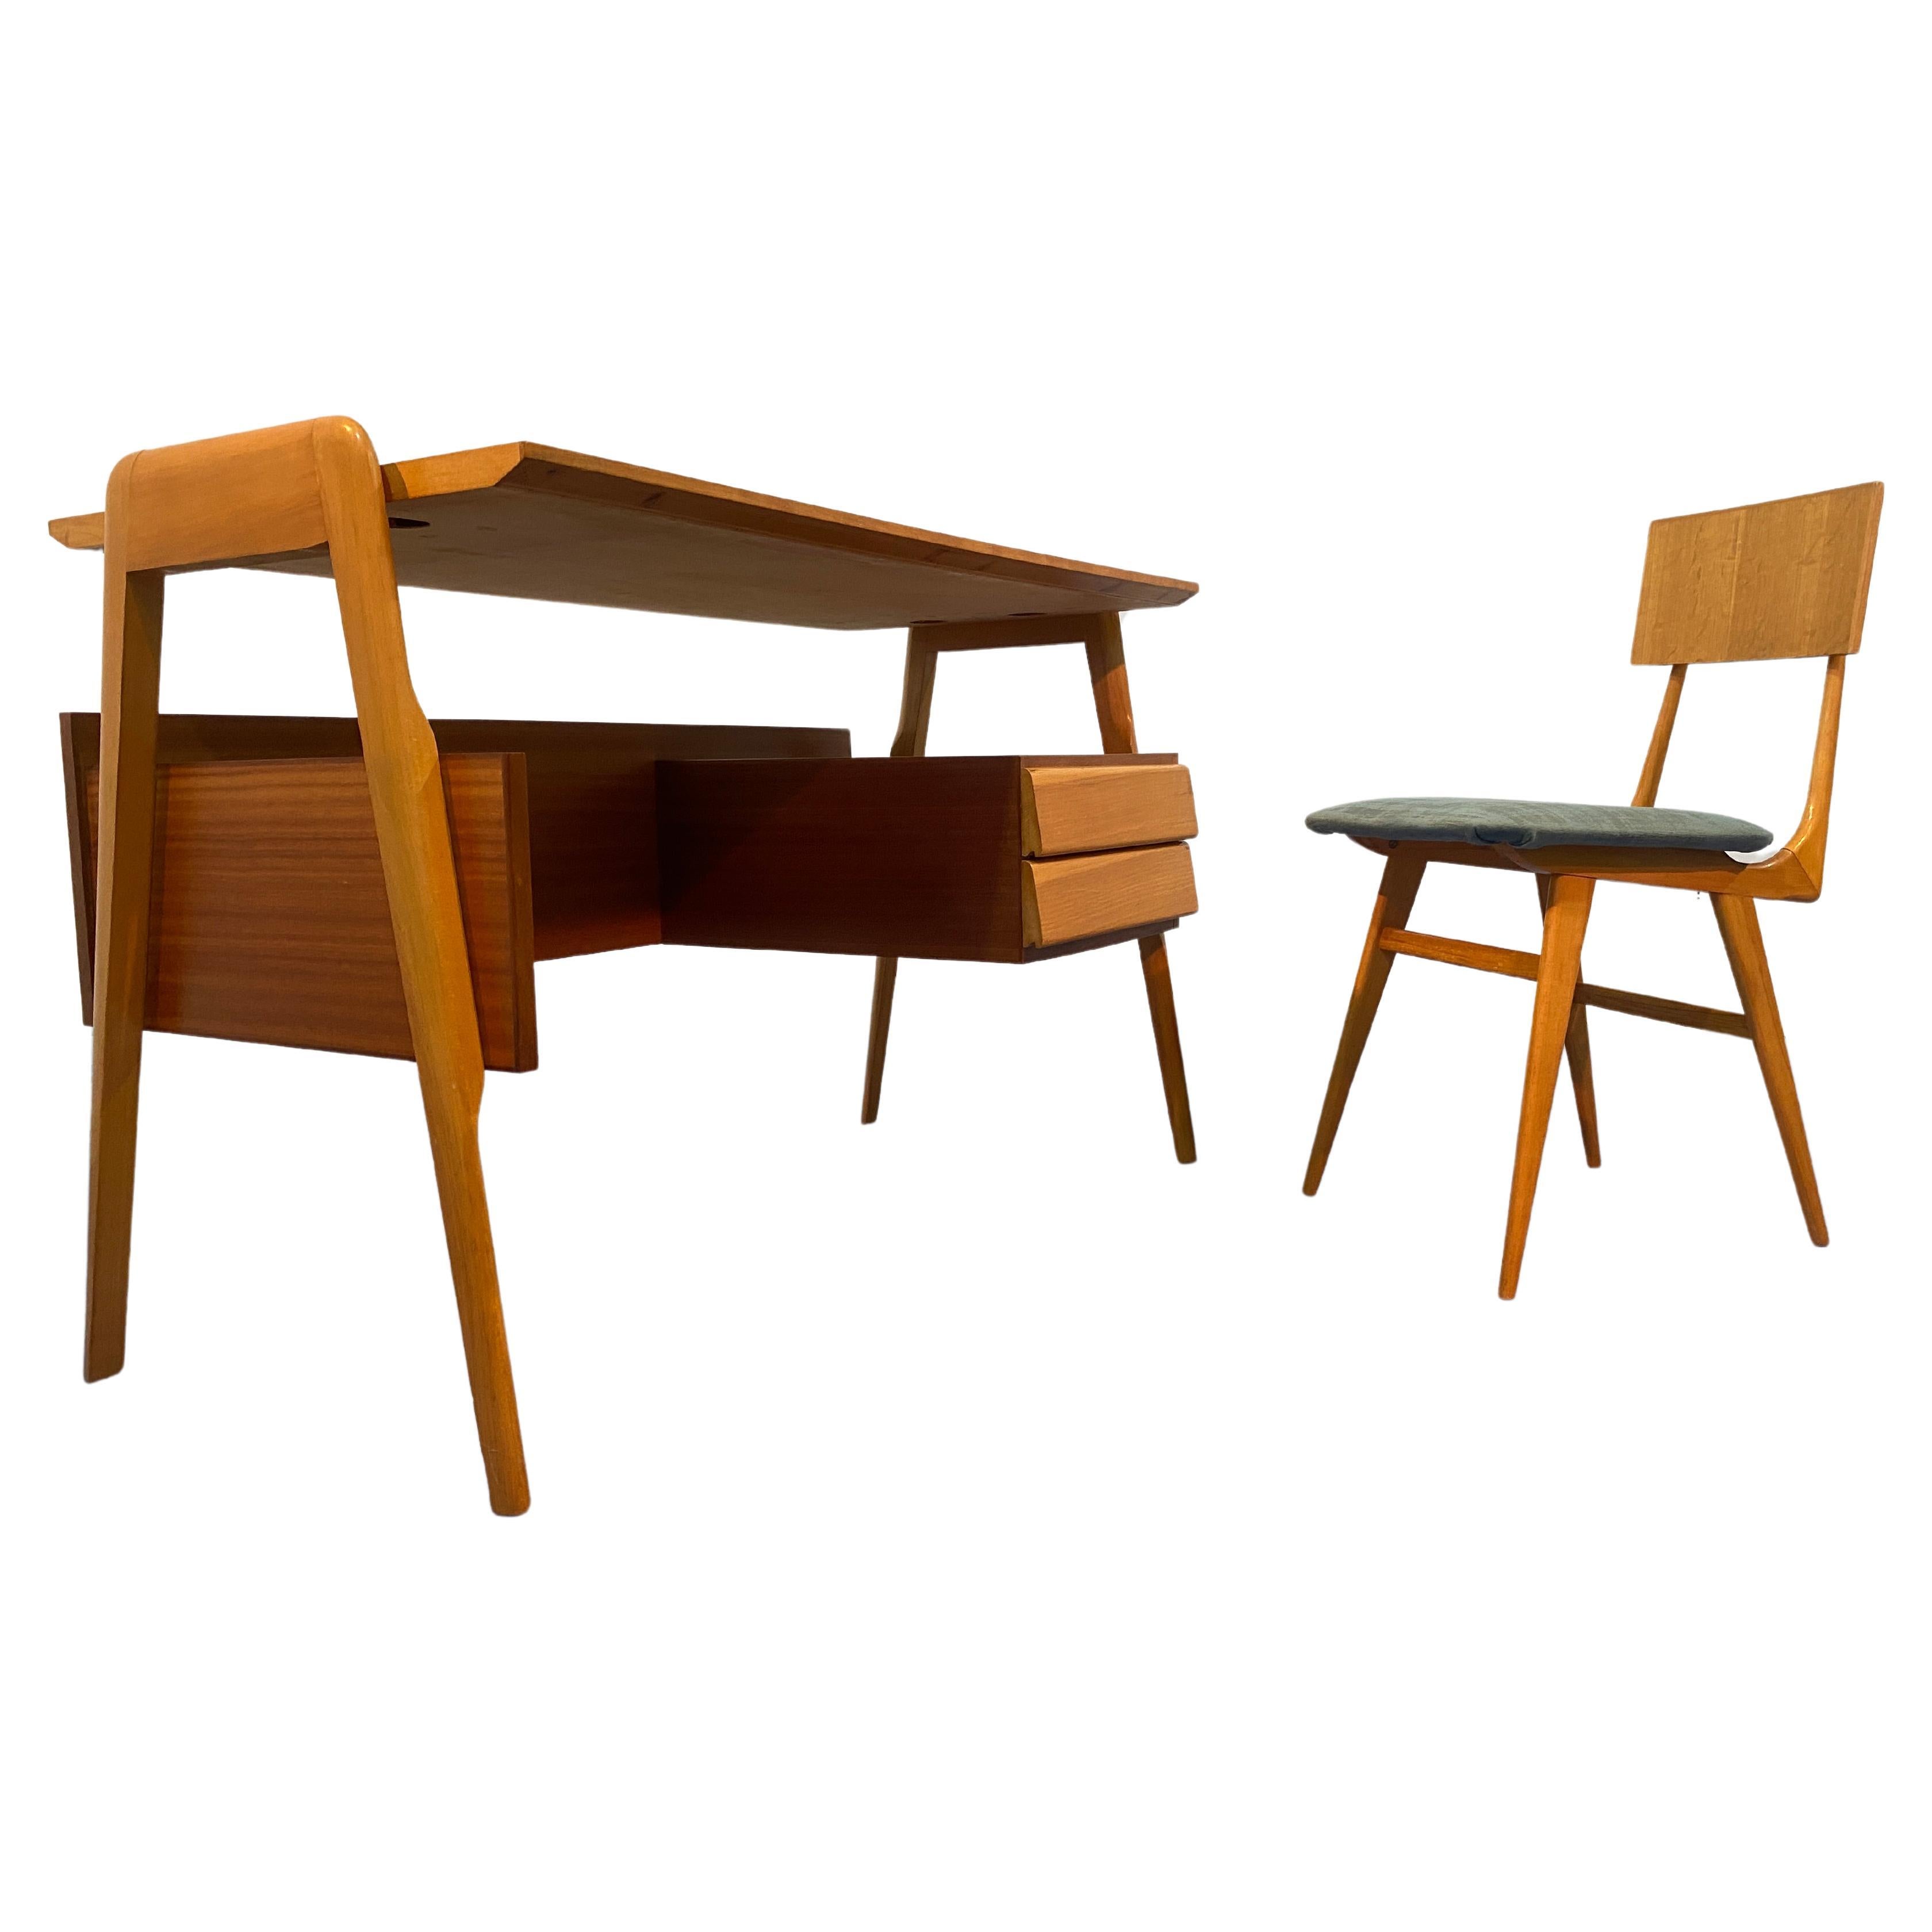 Italian Mid Century Modern desk and chair designed by Vittorio Dassi in 1950s